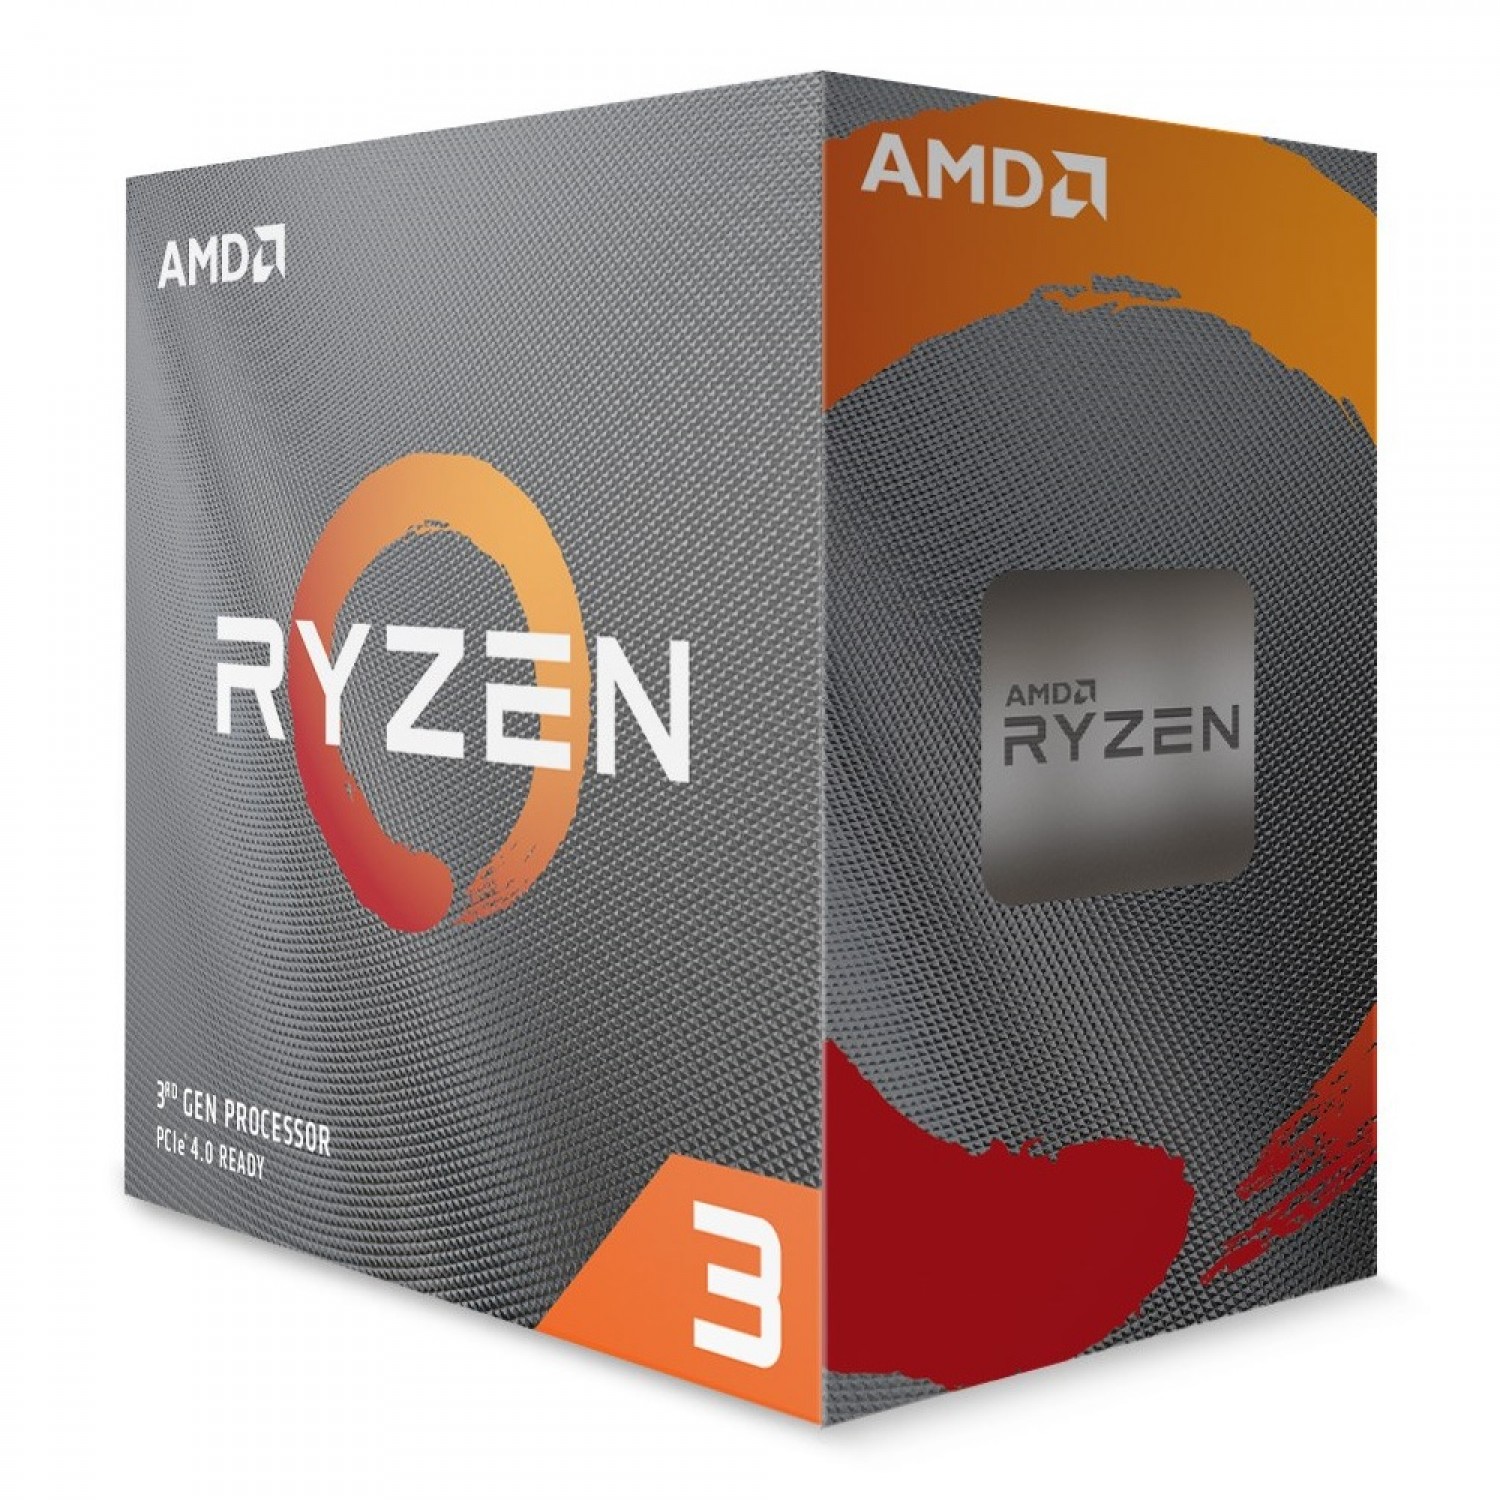 پردازنده AMD Ryzen 3 3100